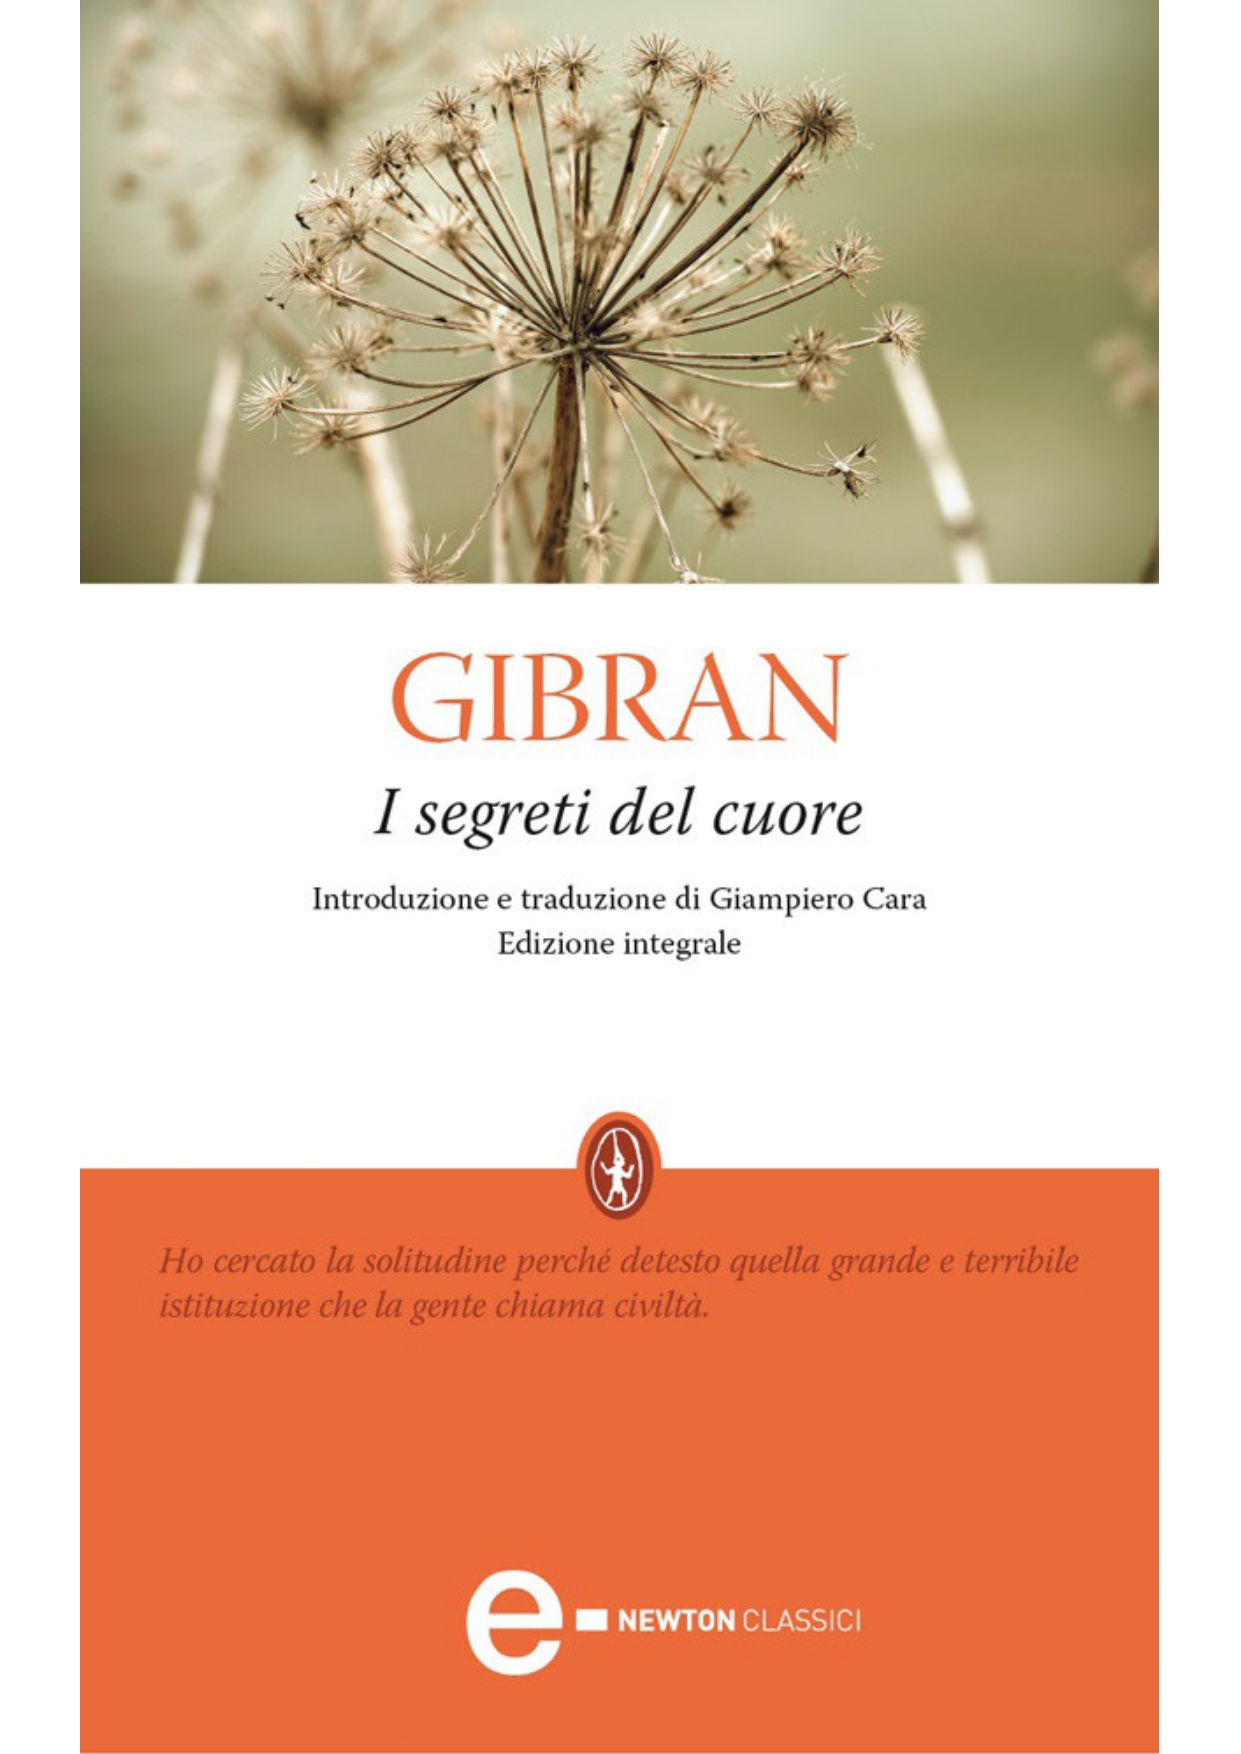 Kahlil Gibran, I segreti del cuore (Secrets of the Heart), translated into Italian by Giampiero Cara, Rome: Newton Compton, 2012.